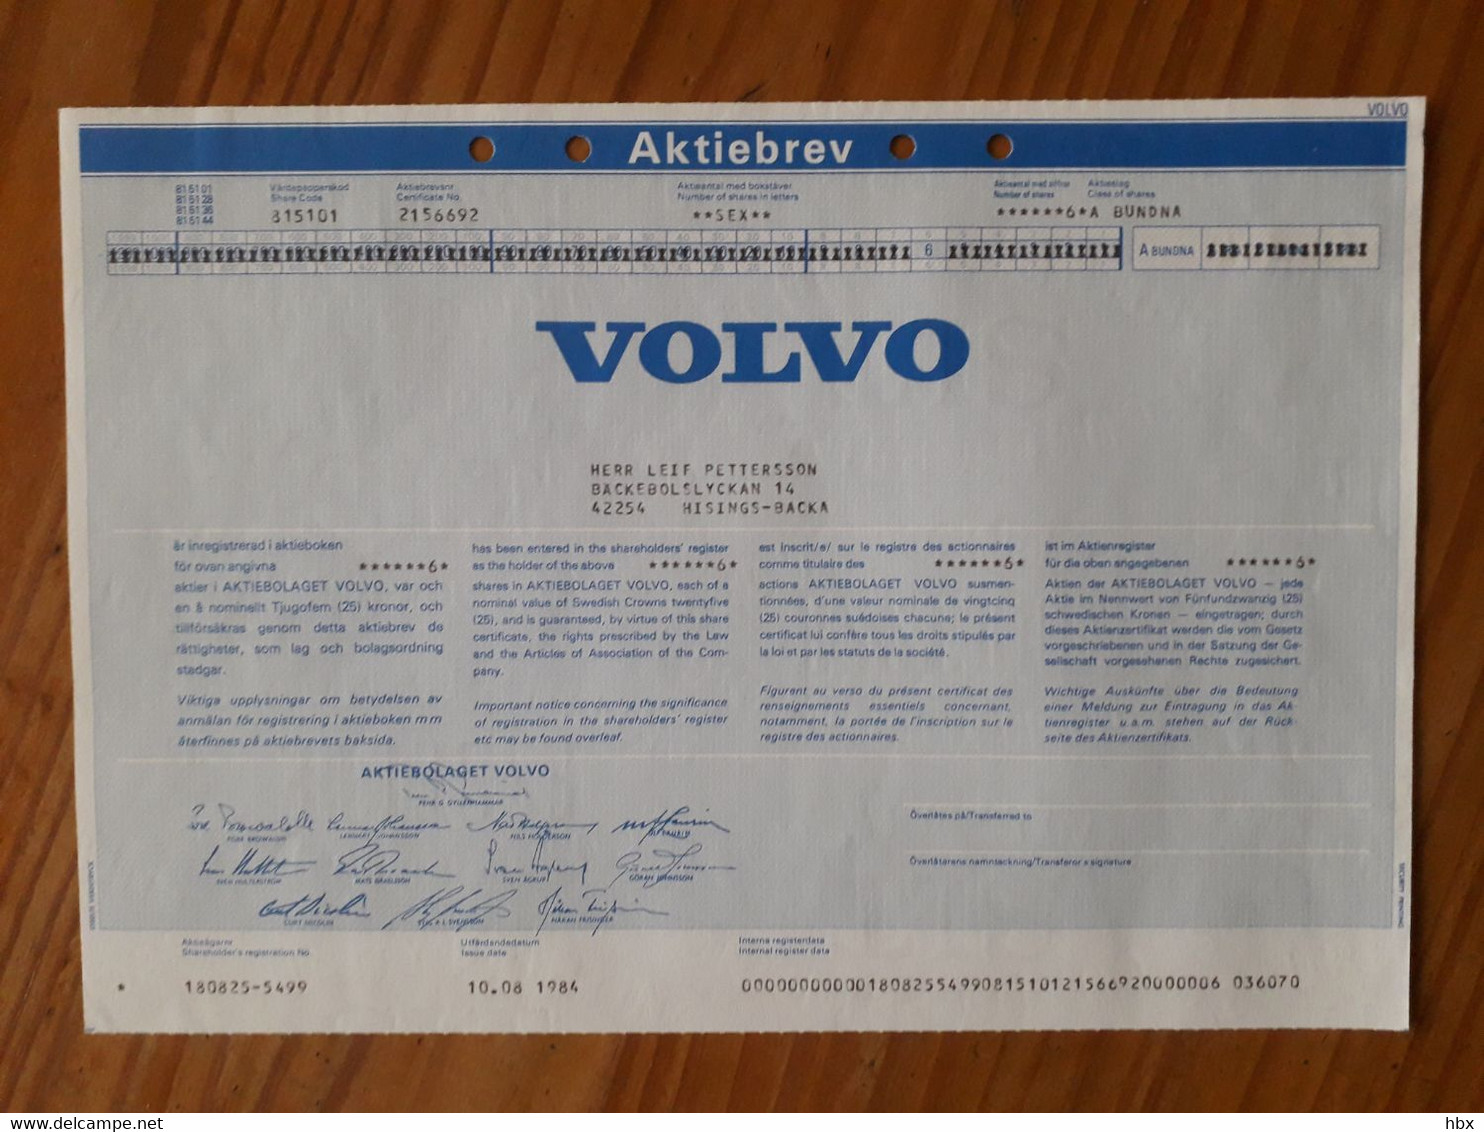 Volvo AB - 1984 - Automobil